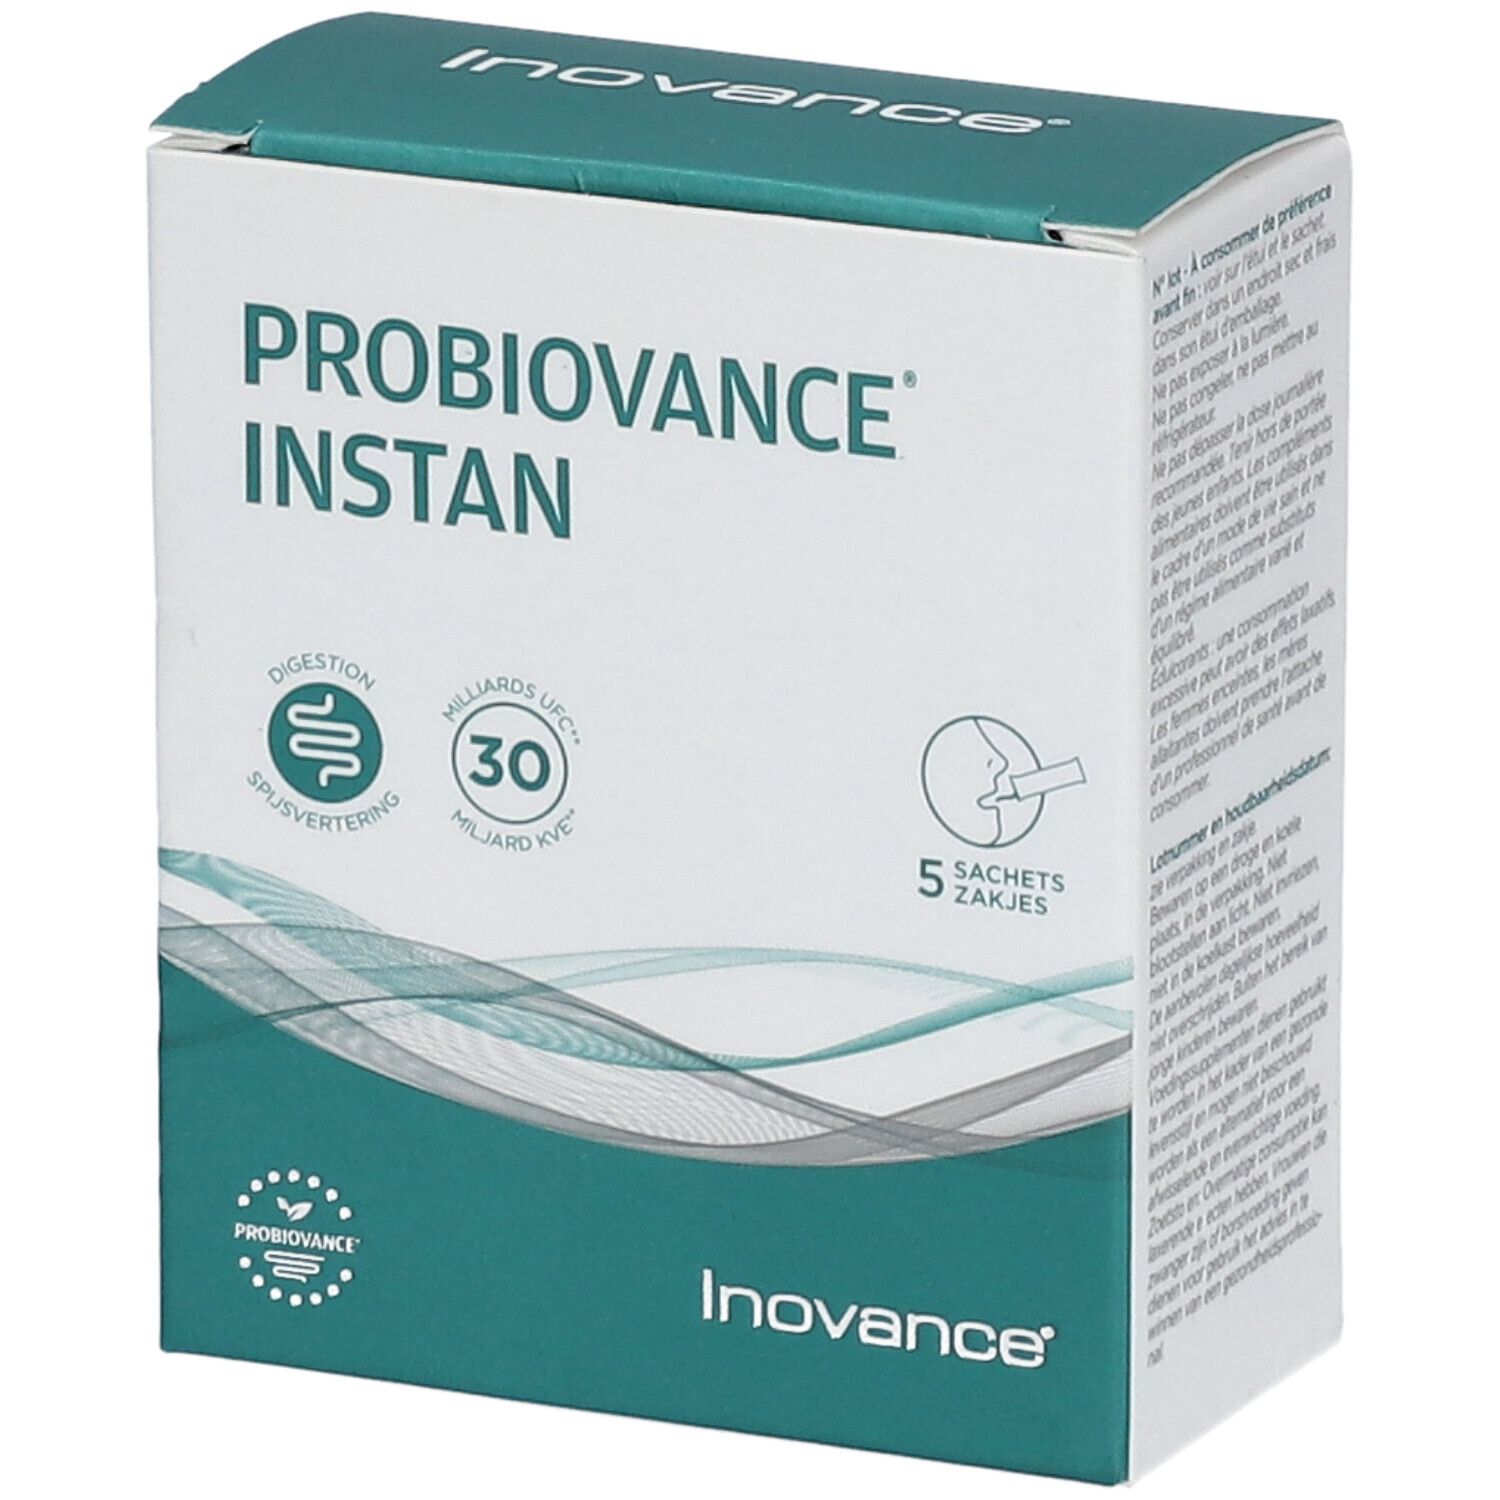 Inovance® Probiovance Instan